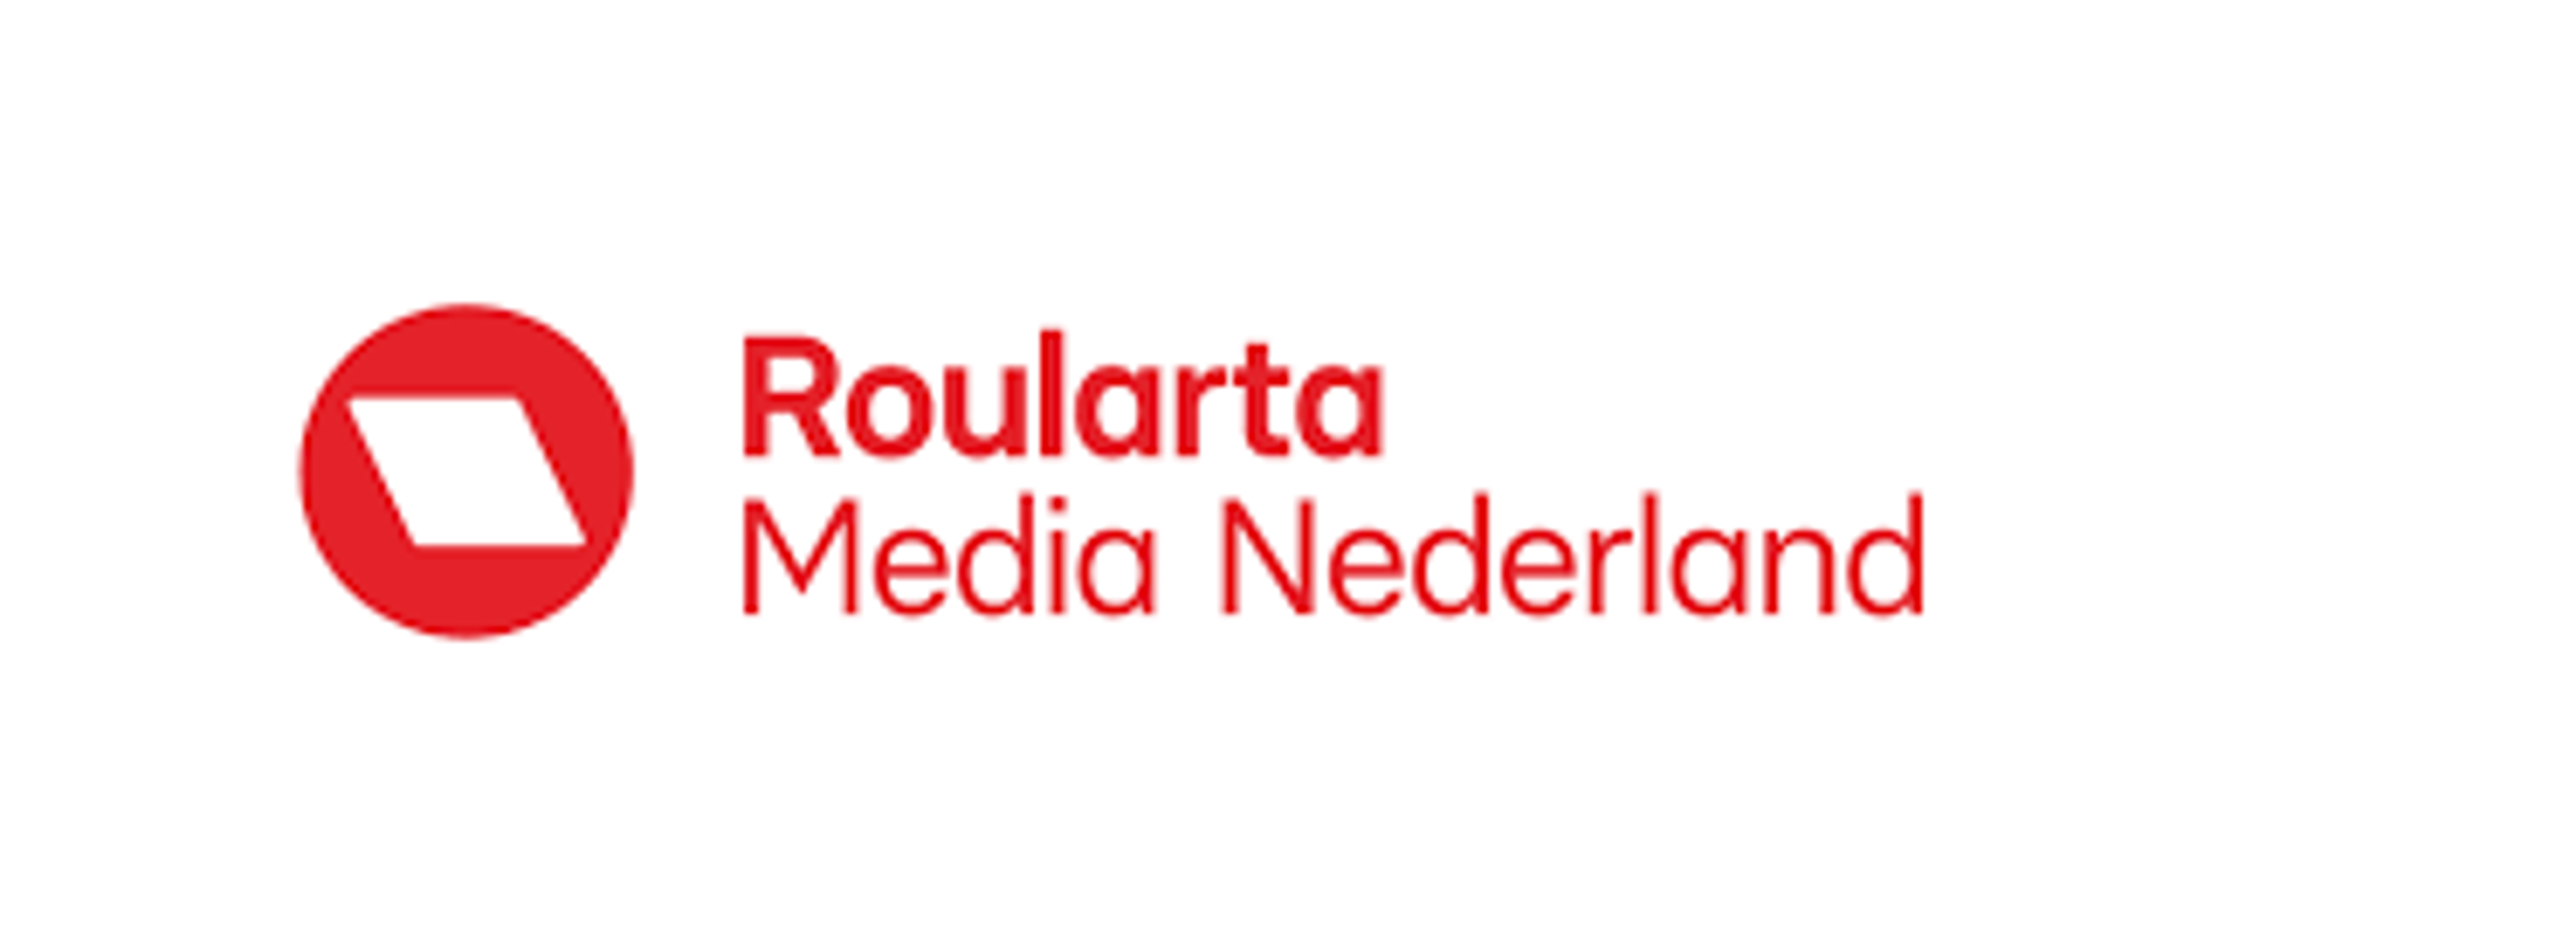 Samenwerking tussen Value Zipper en Roularta Media Nederland stopt